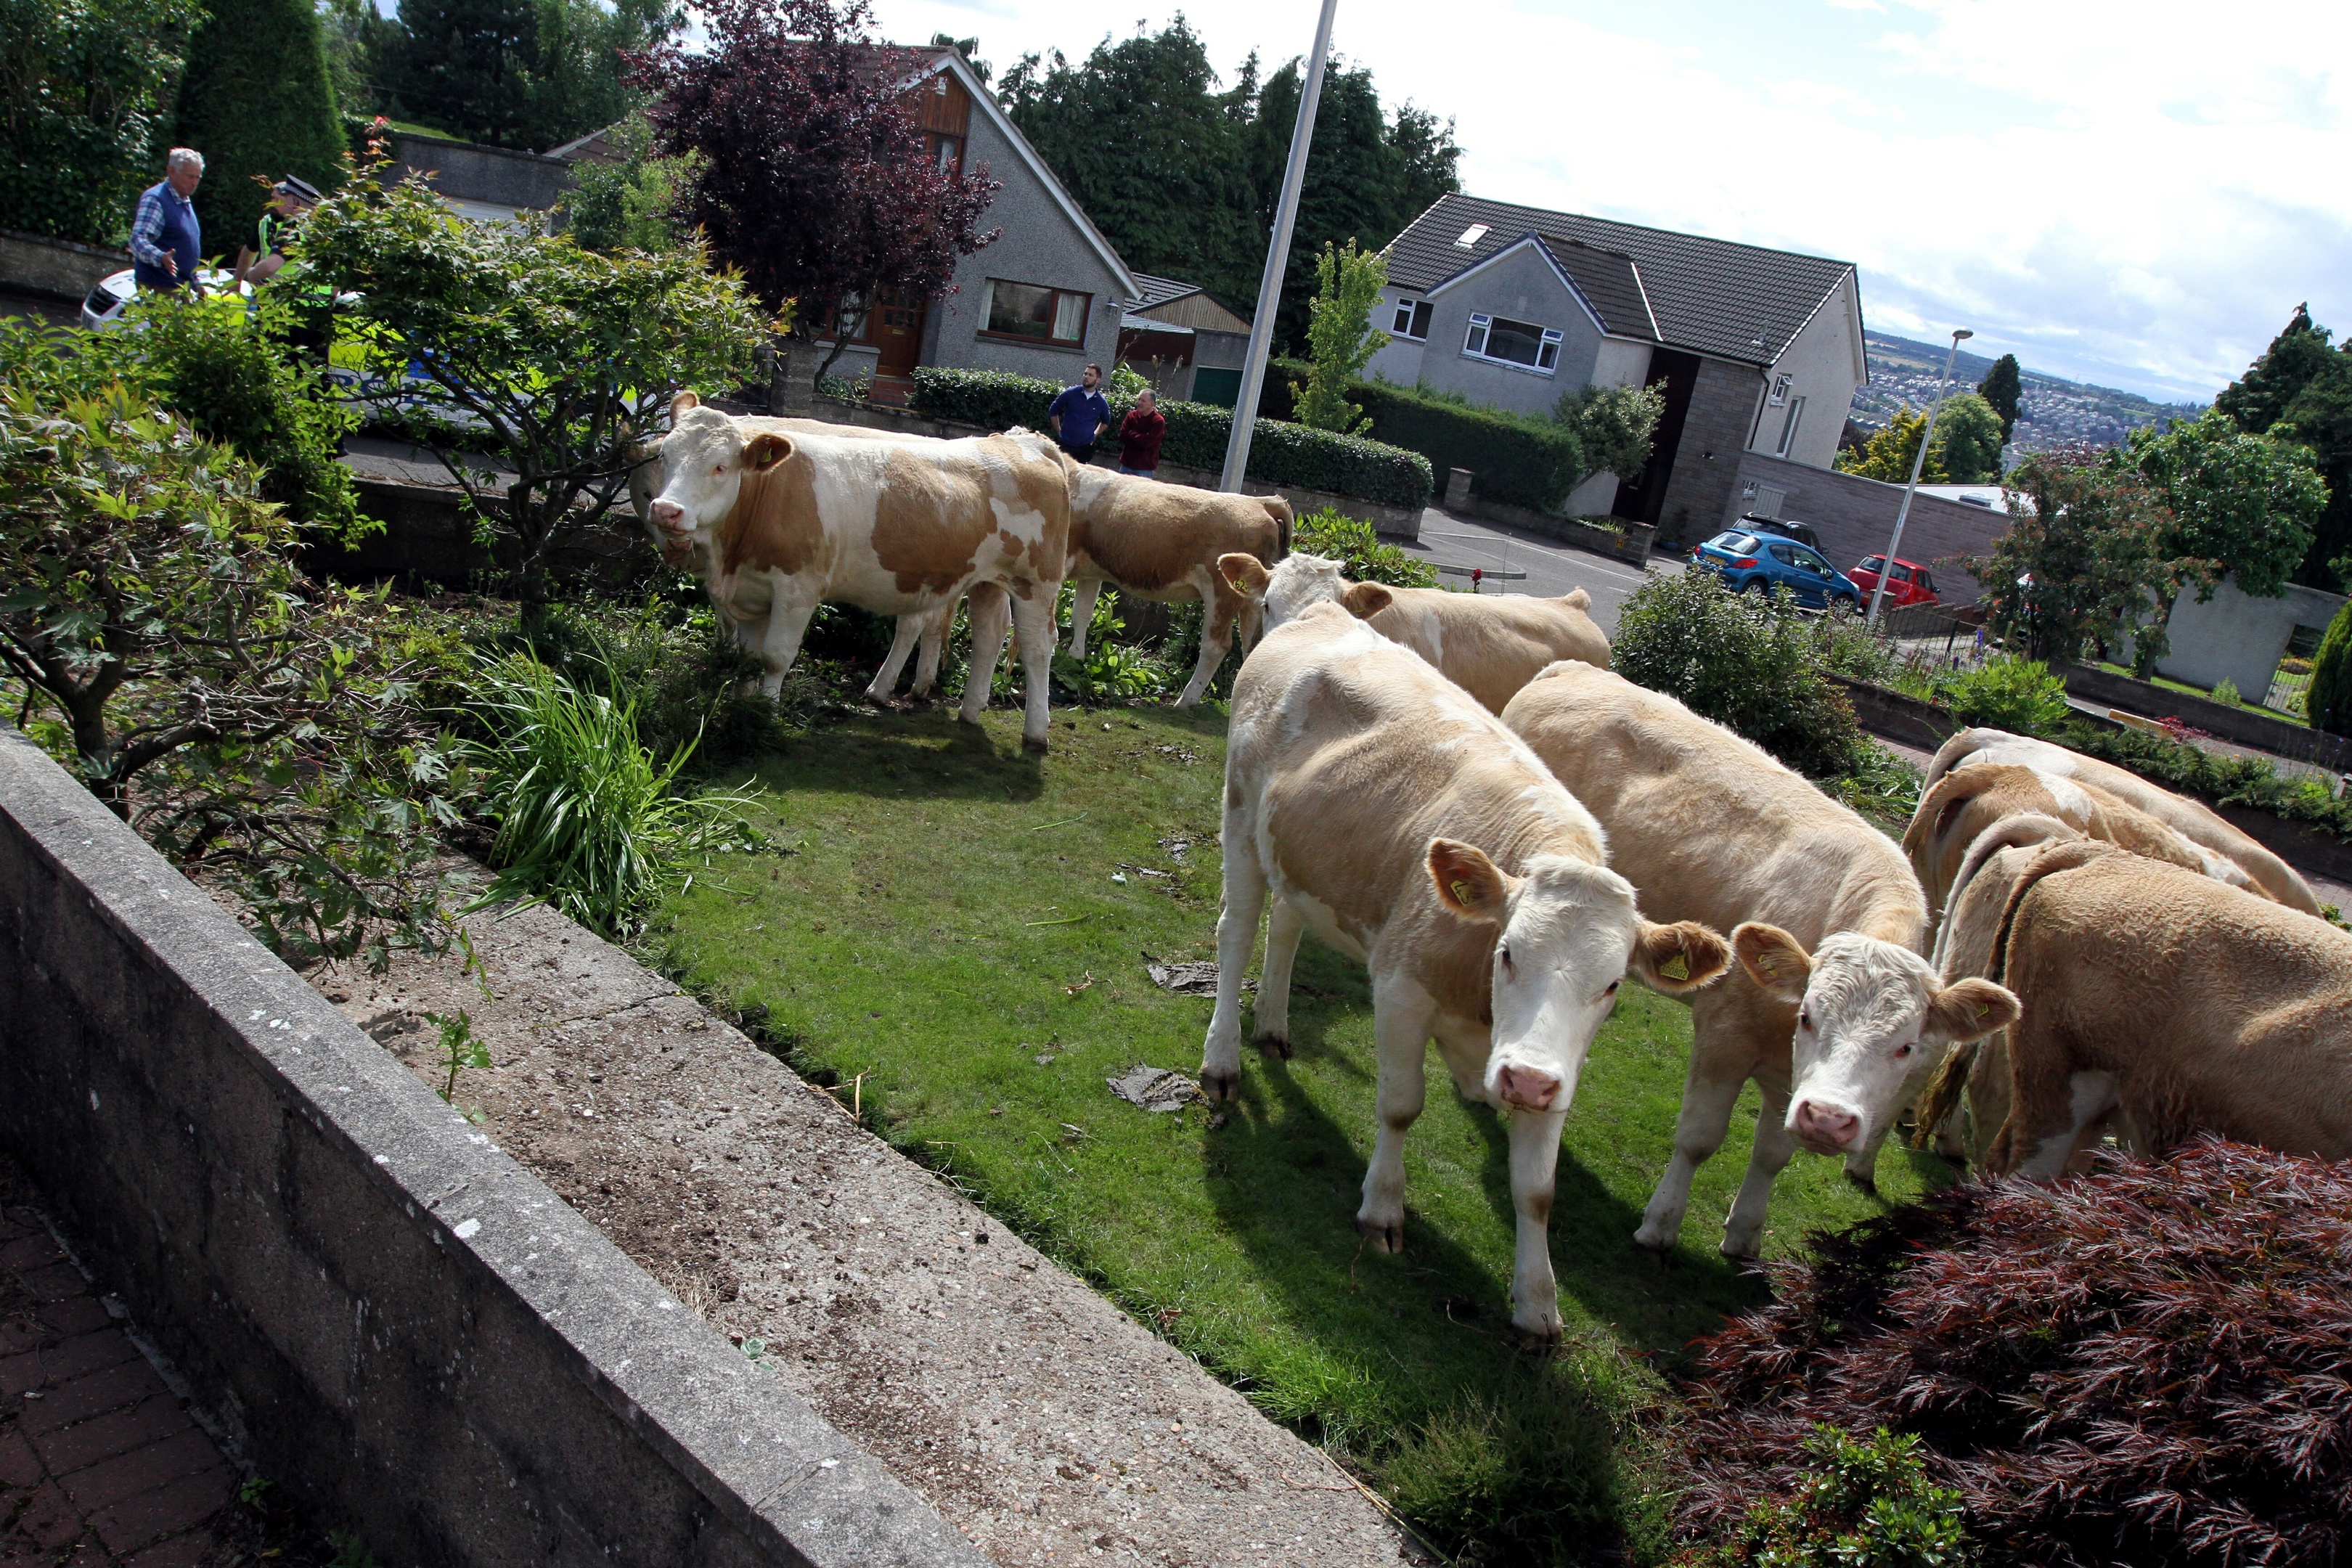 Cows in a garden in Corsie Avenue in Perth.